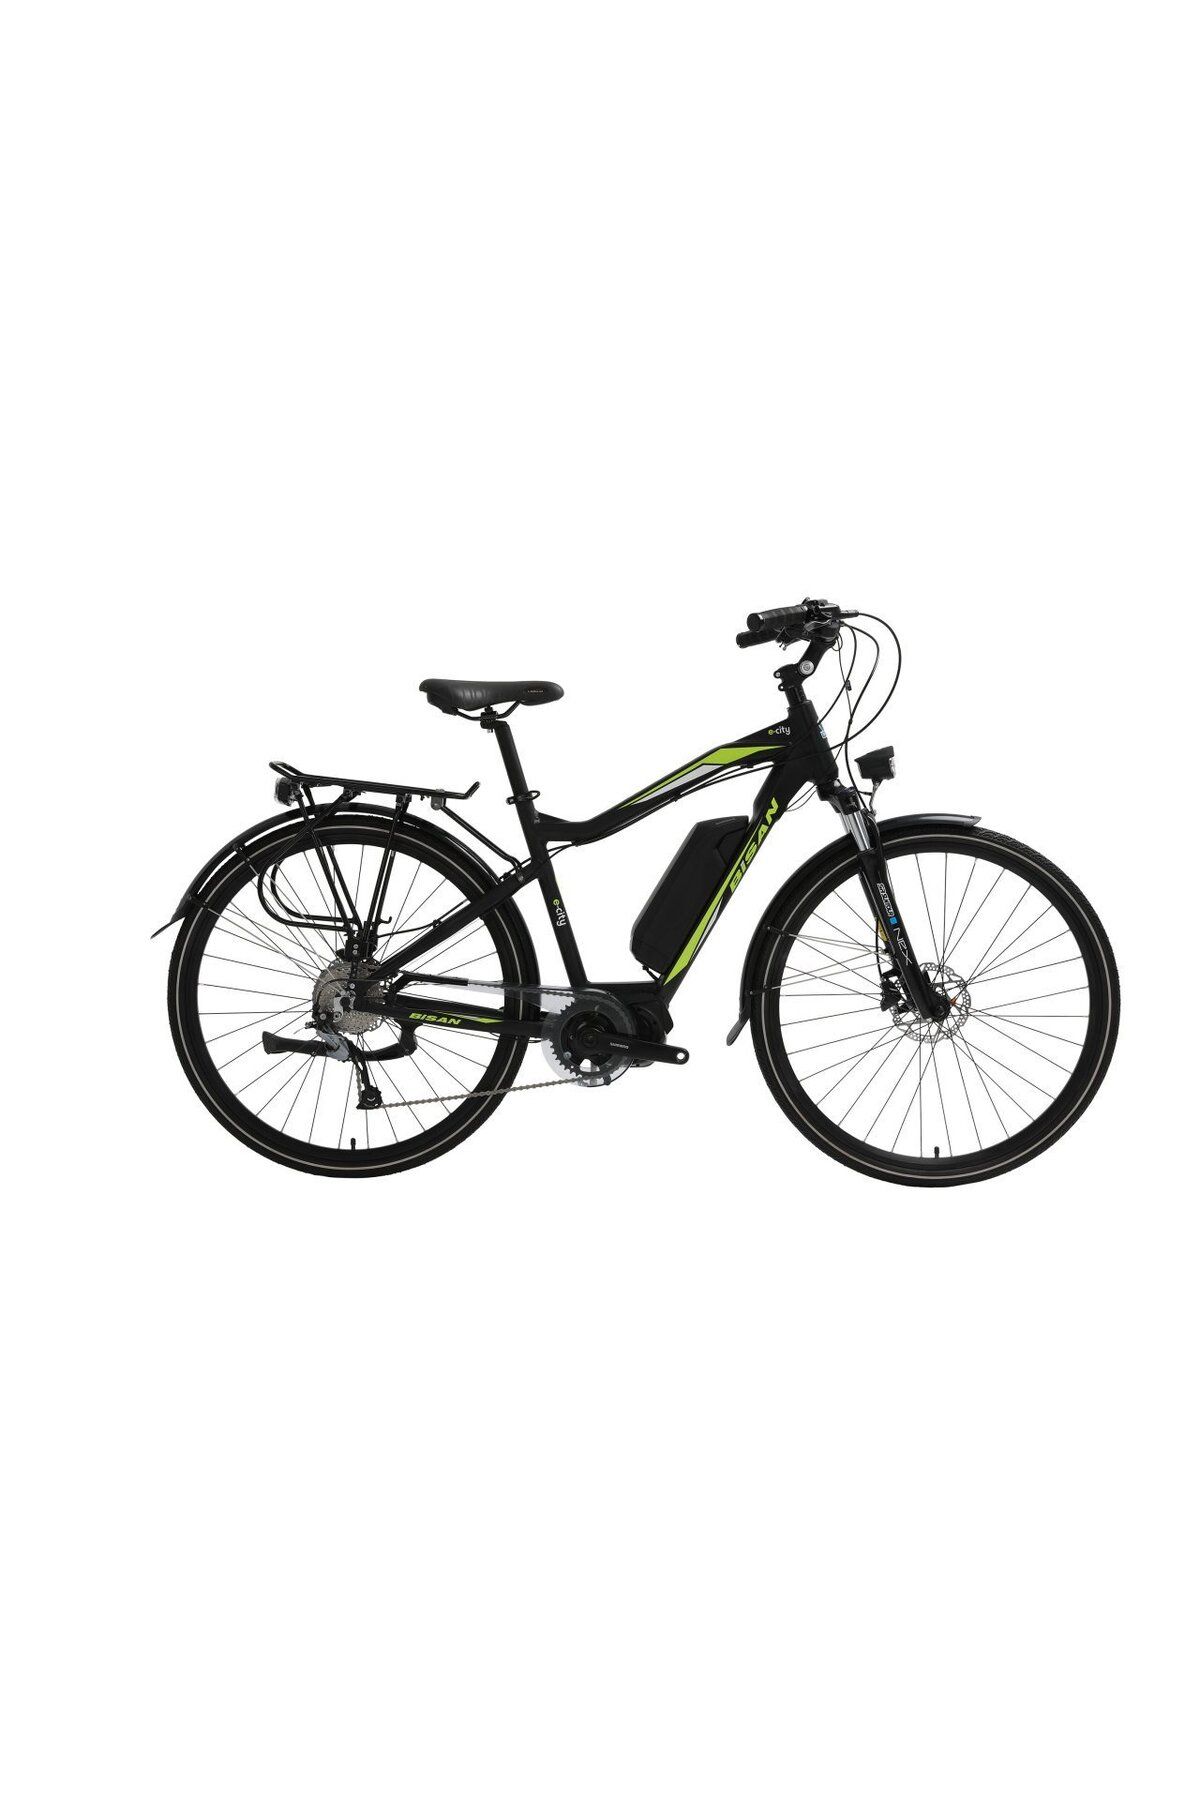 Bisan E-City Elektrikli Şehir Bisikleti Siyah-Yeşil-48 cm